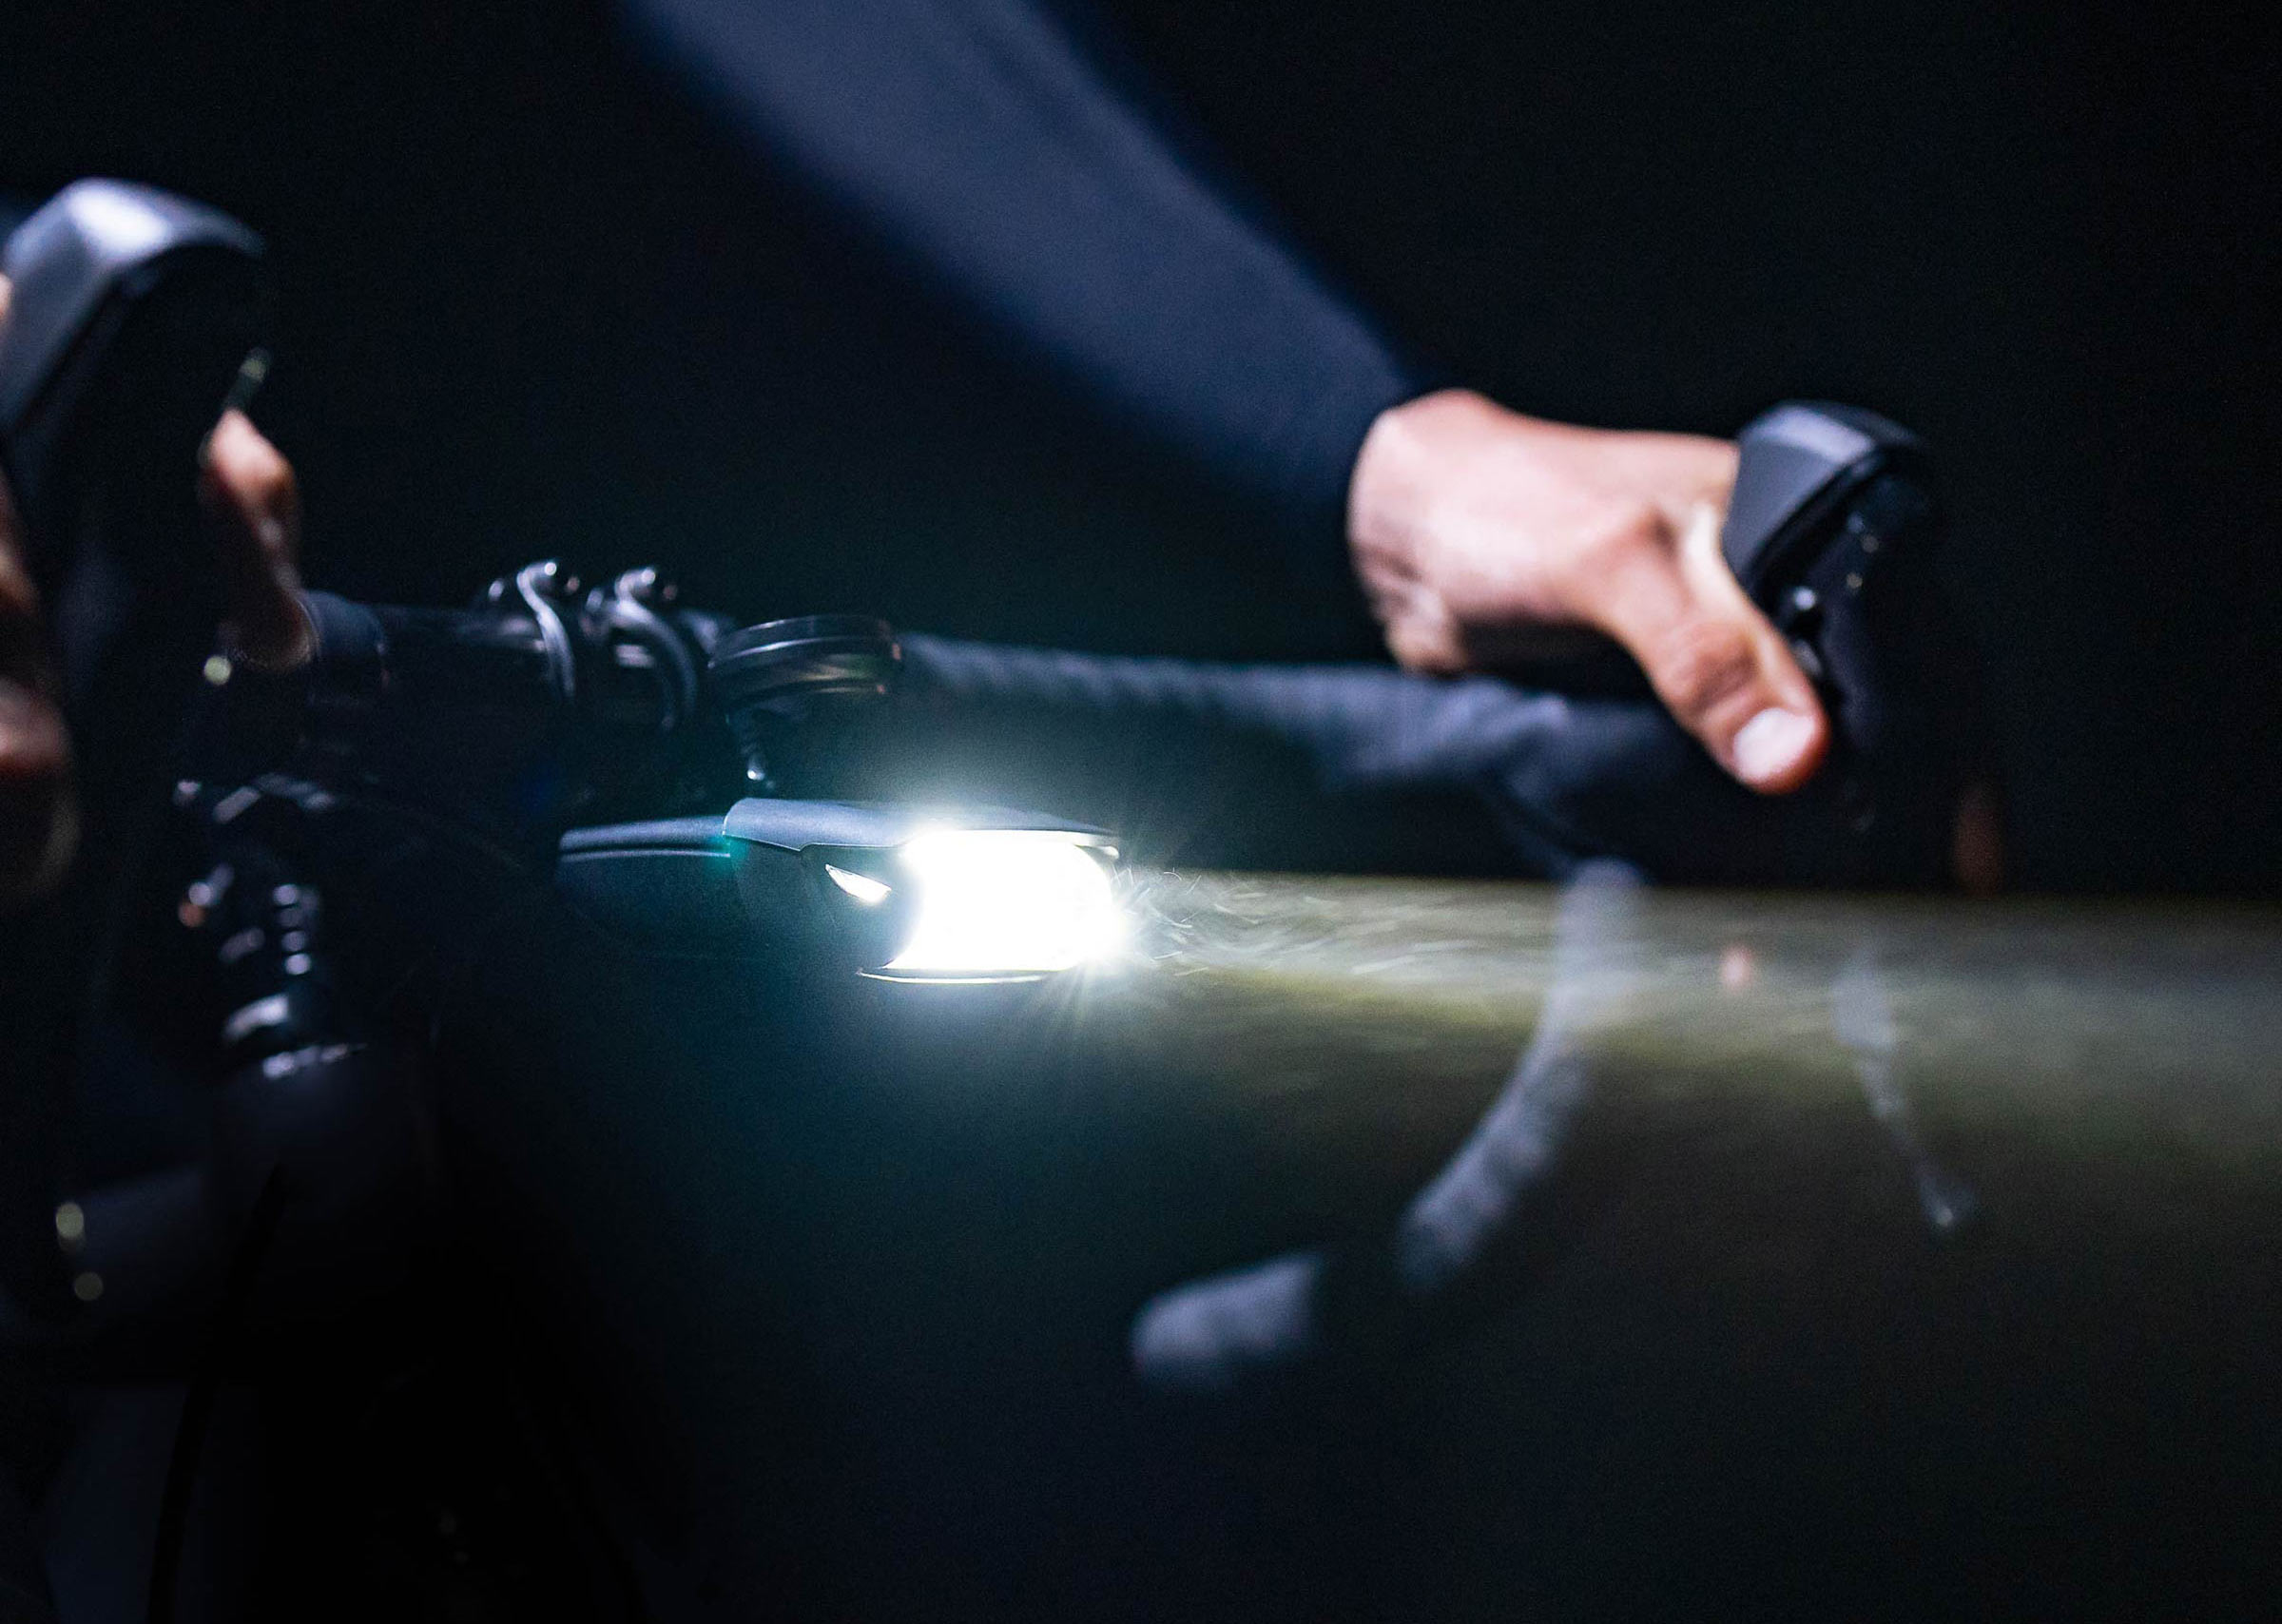 lightskin naca road aero profile bike headlight shown on a bike